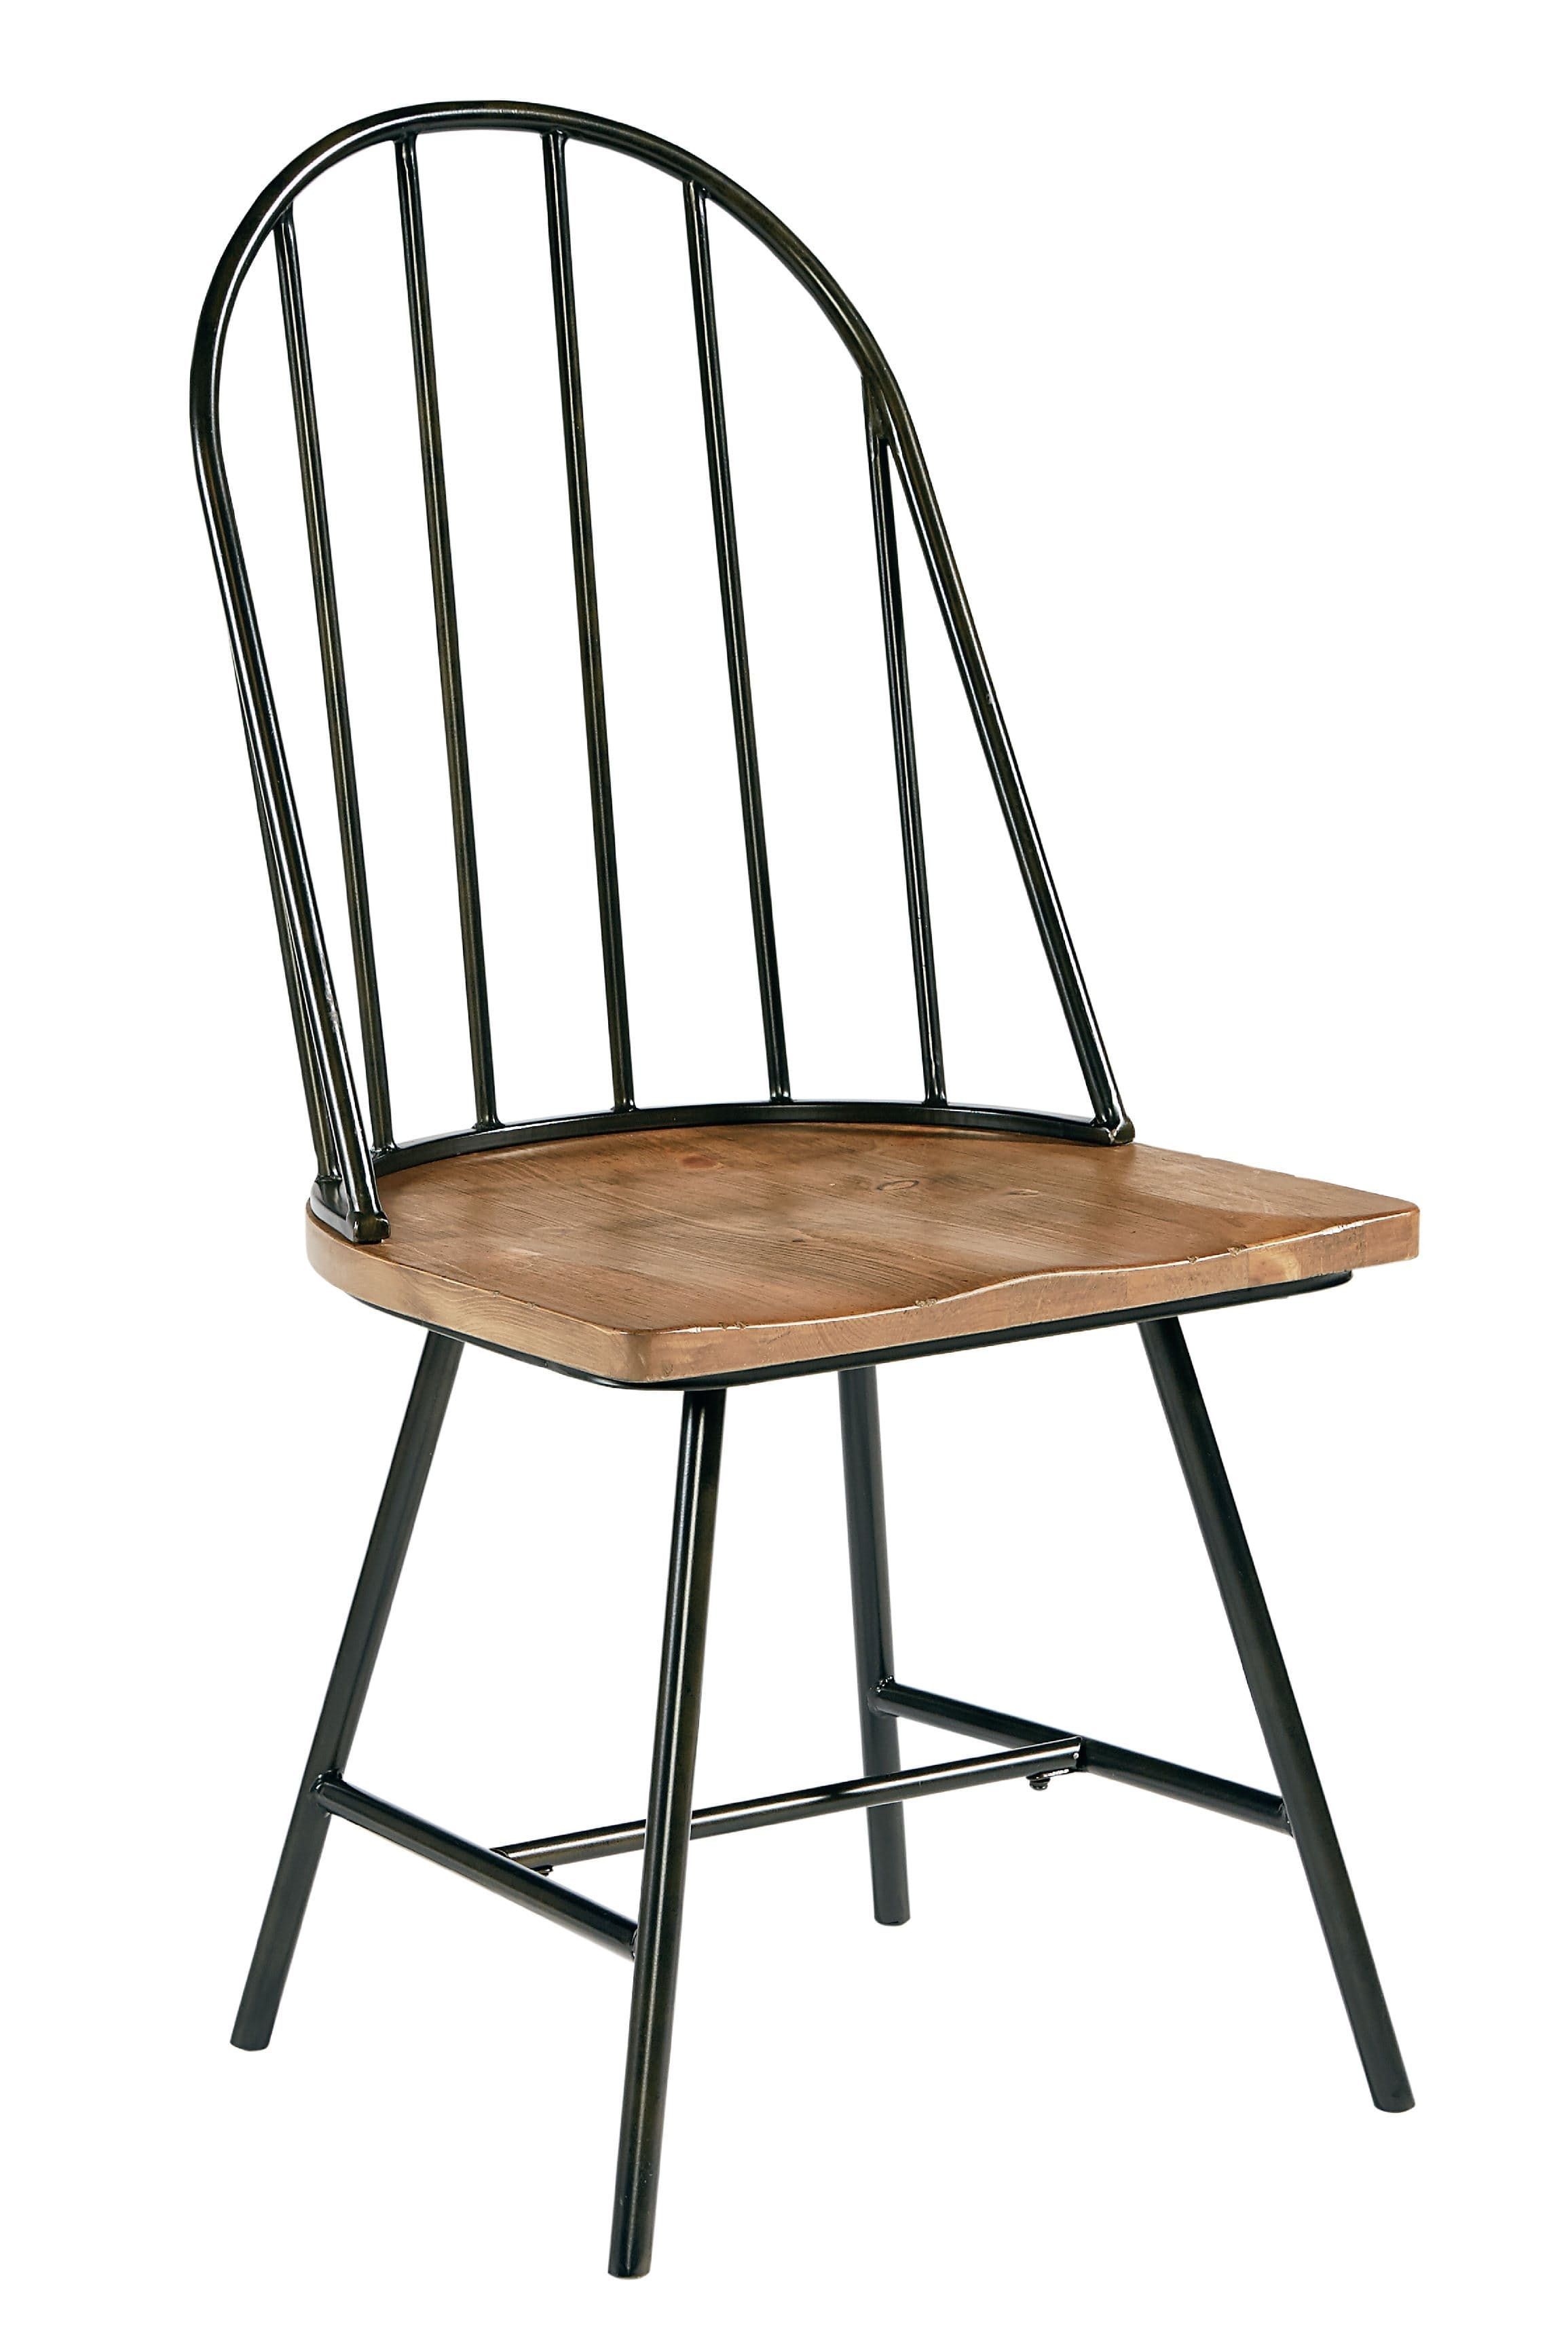 Magnolia Home – Windsor Metal And Wood Hoop Chair St: (View 5 of 20)